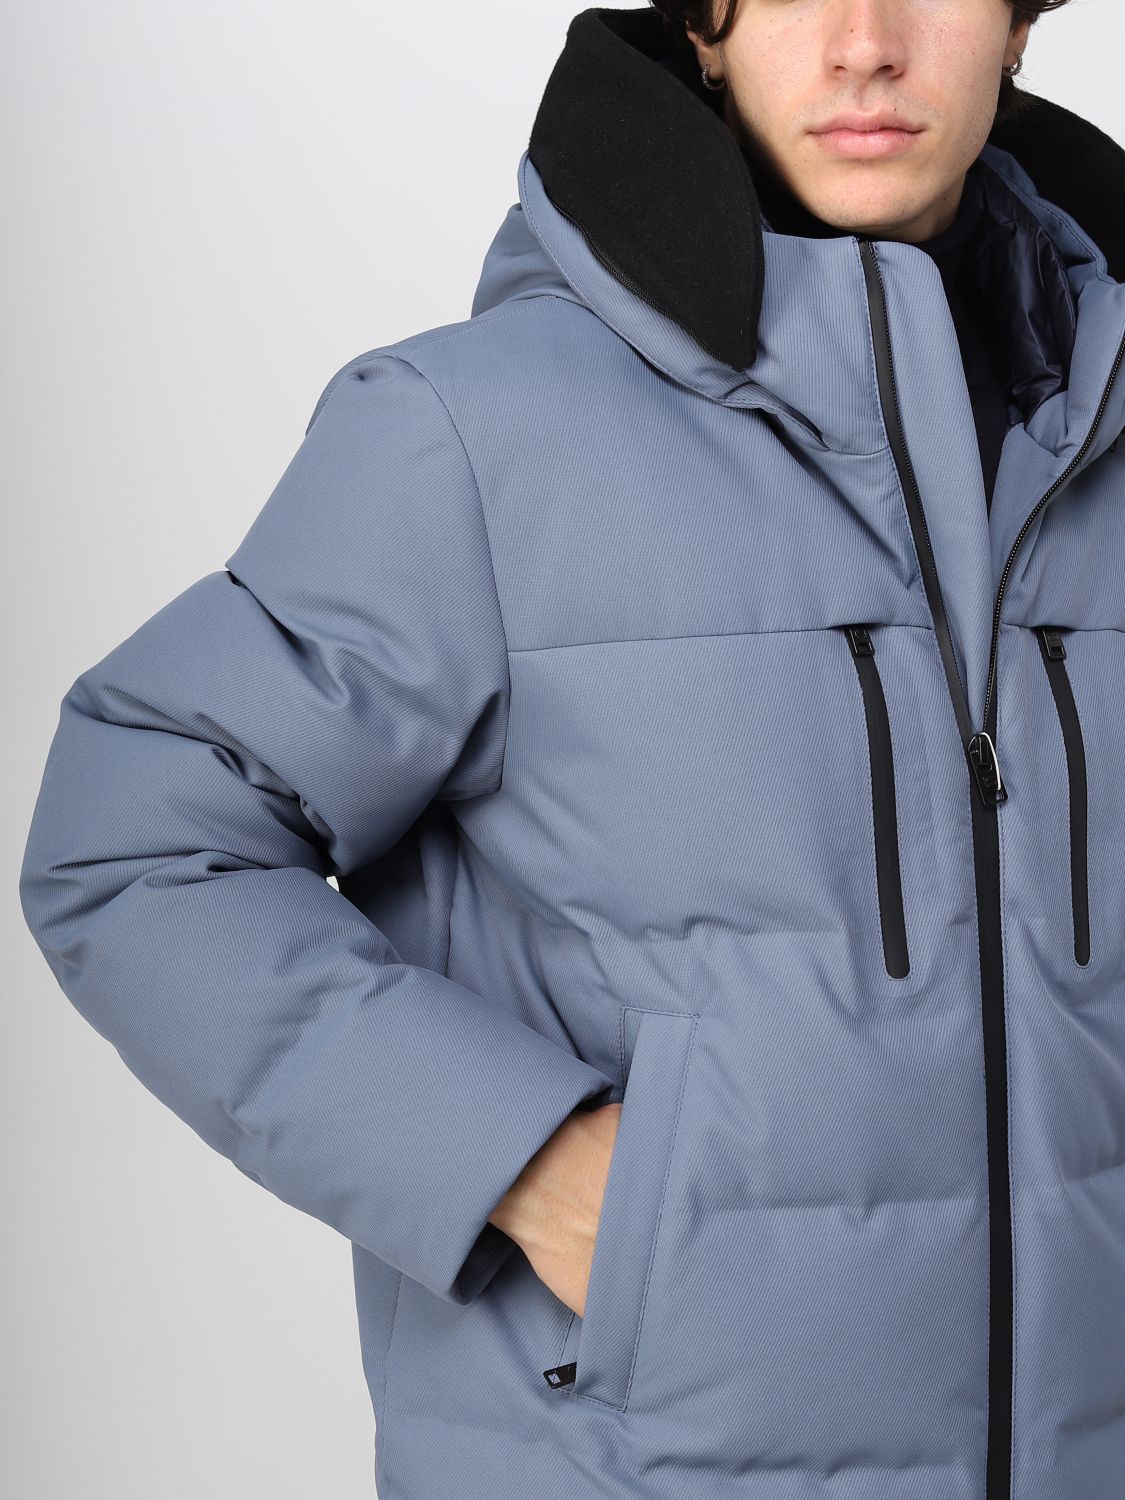 Woolrich Men’s Waterproof Down Jacket With Detachable, 52% OFF